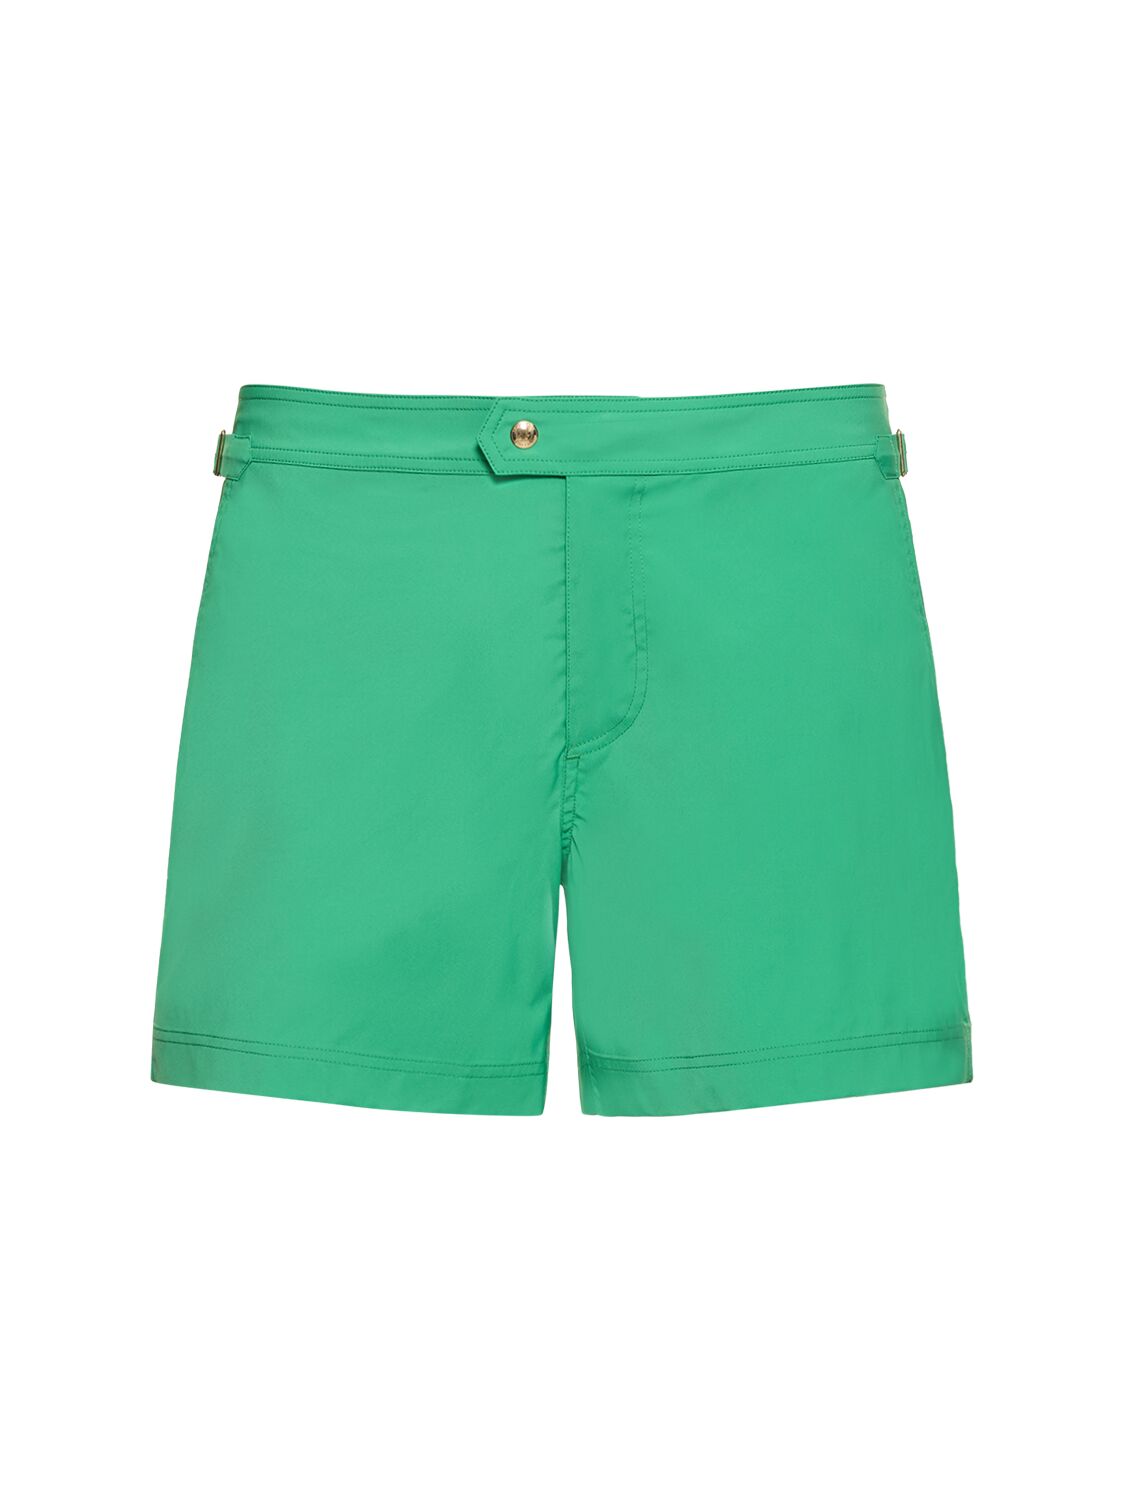 Tom Ford Compact Poplin Swim Shorts In Green